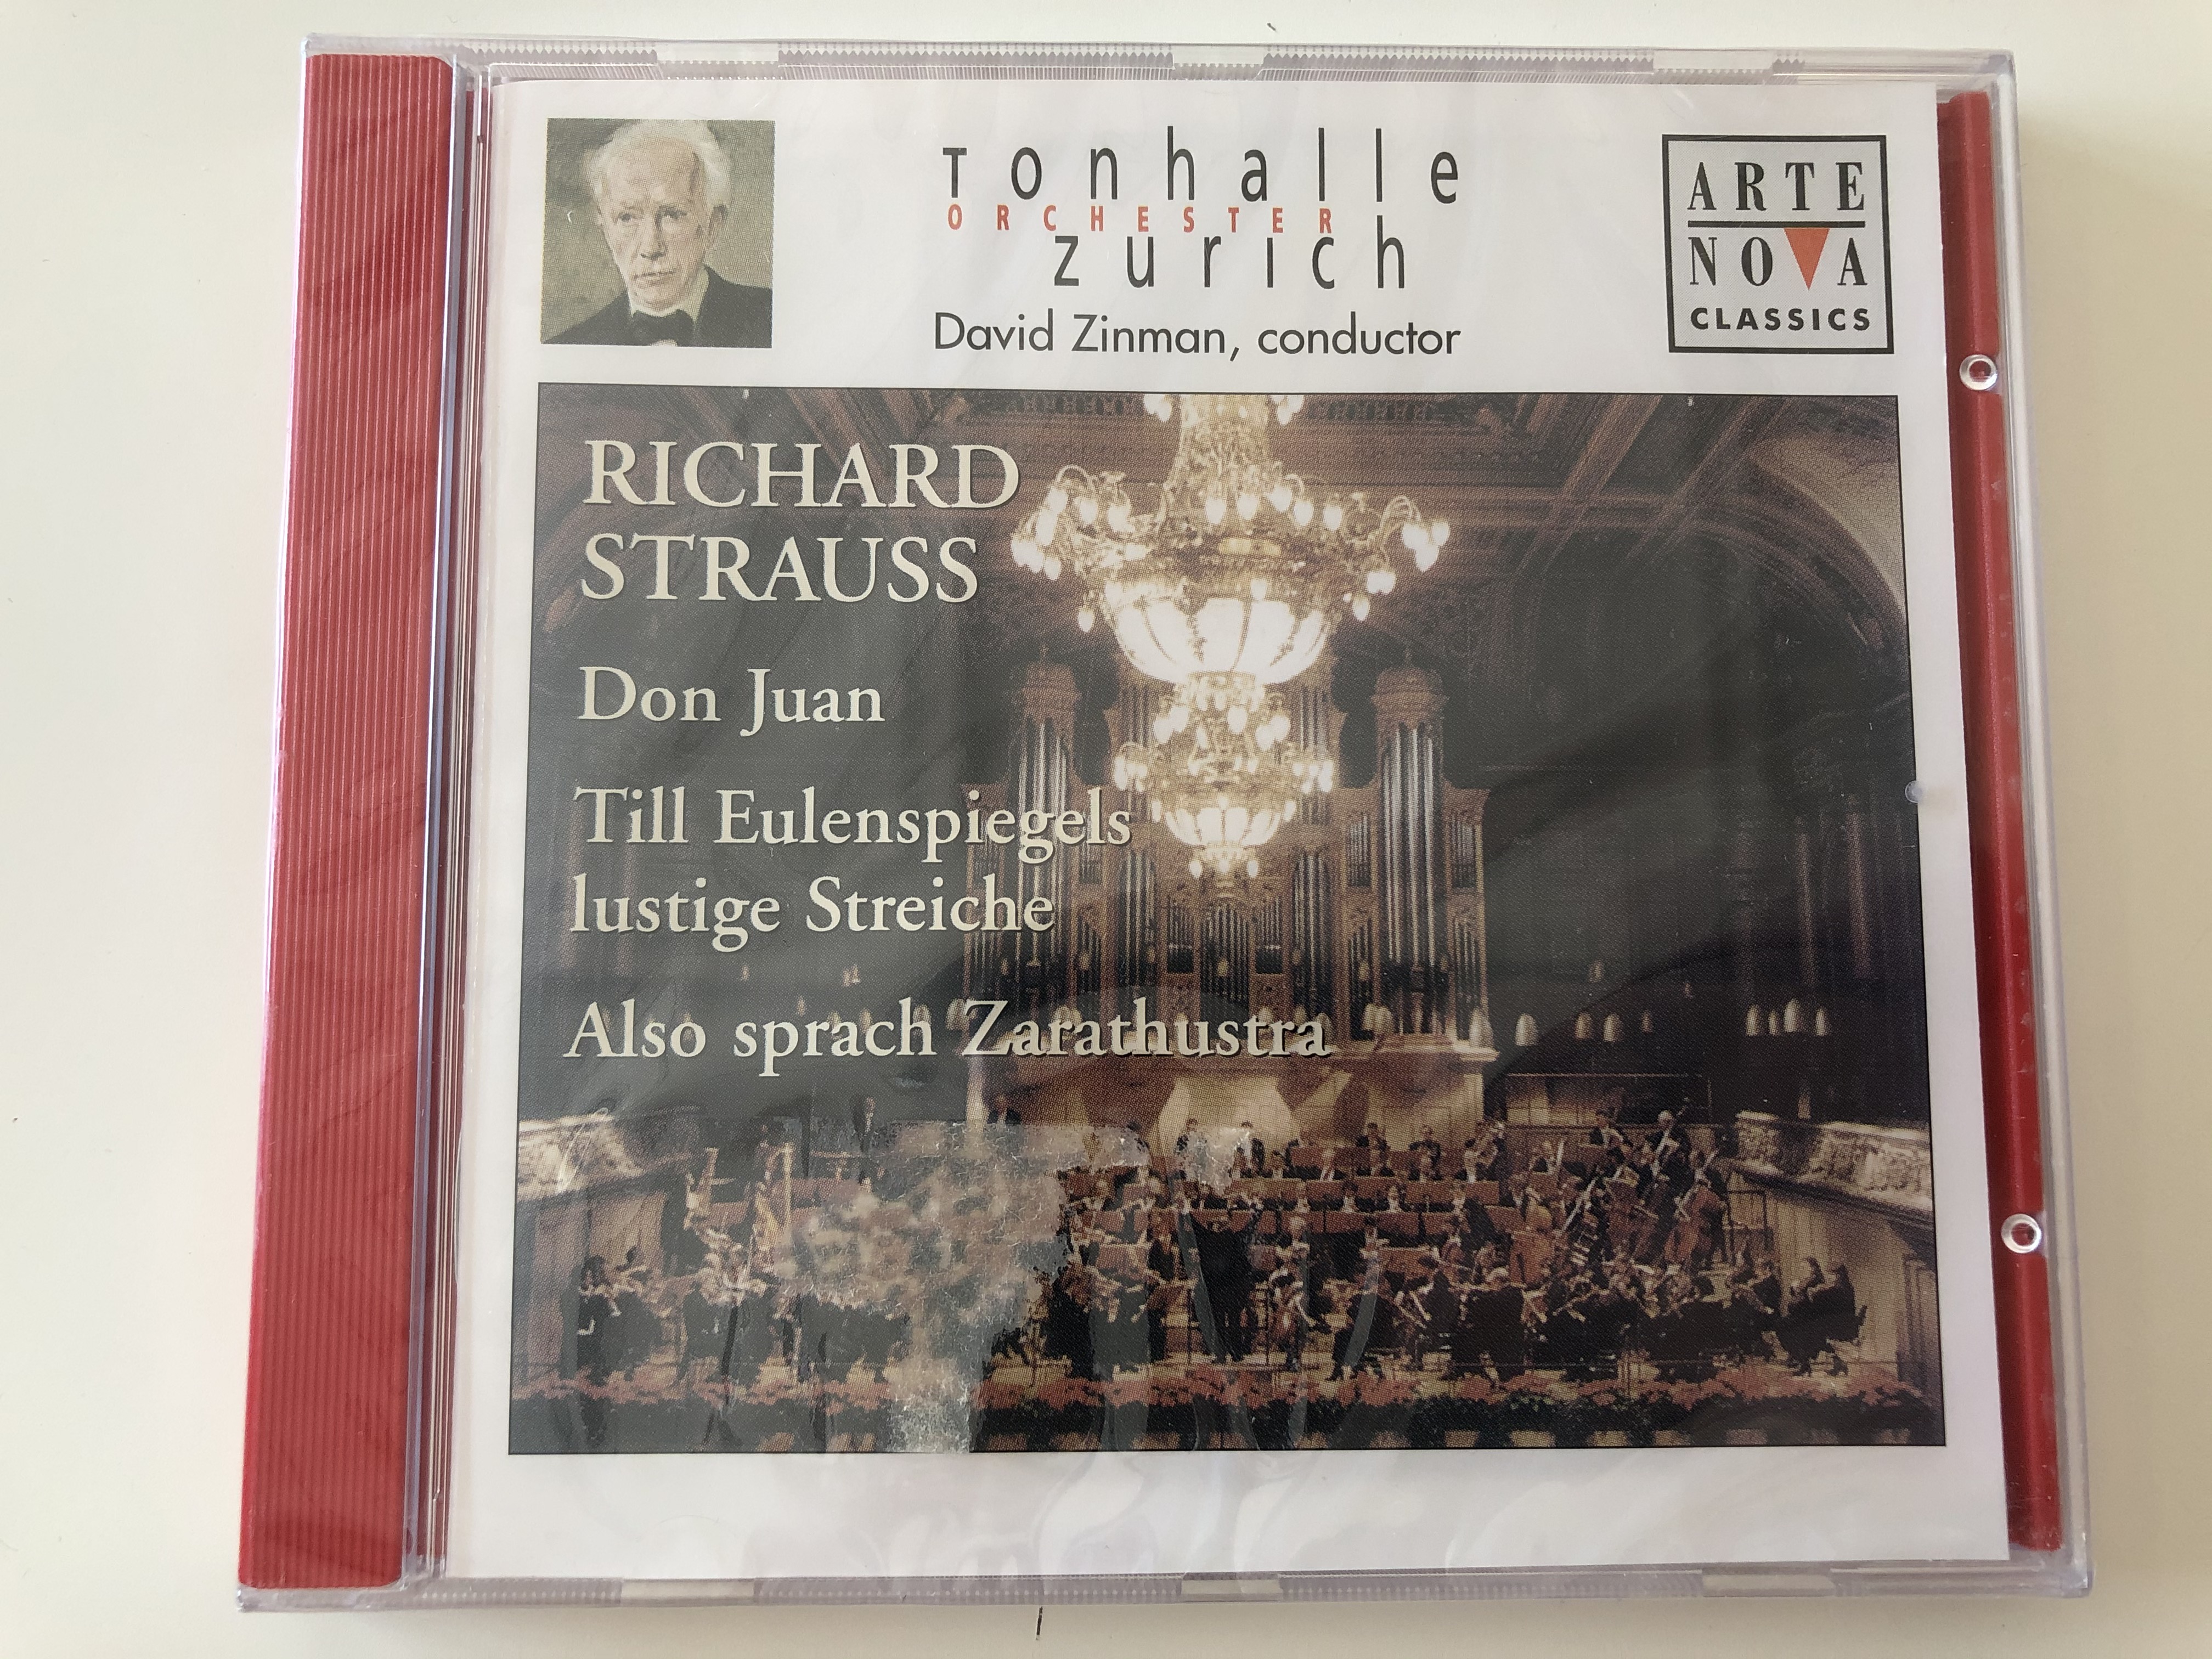 tonhalle-orchester-z-rich-david-zinman-conductor-richard-strauss-don-juan-till-eulenspiegels-lustige-streiche-also-sprach-zarathustra-arte-nova-classics-audio-cd-2001-74321-87071-2-1-.jpg